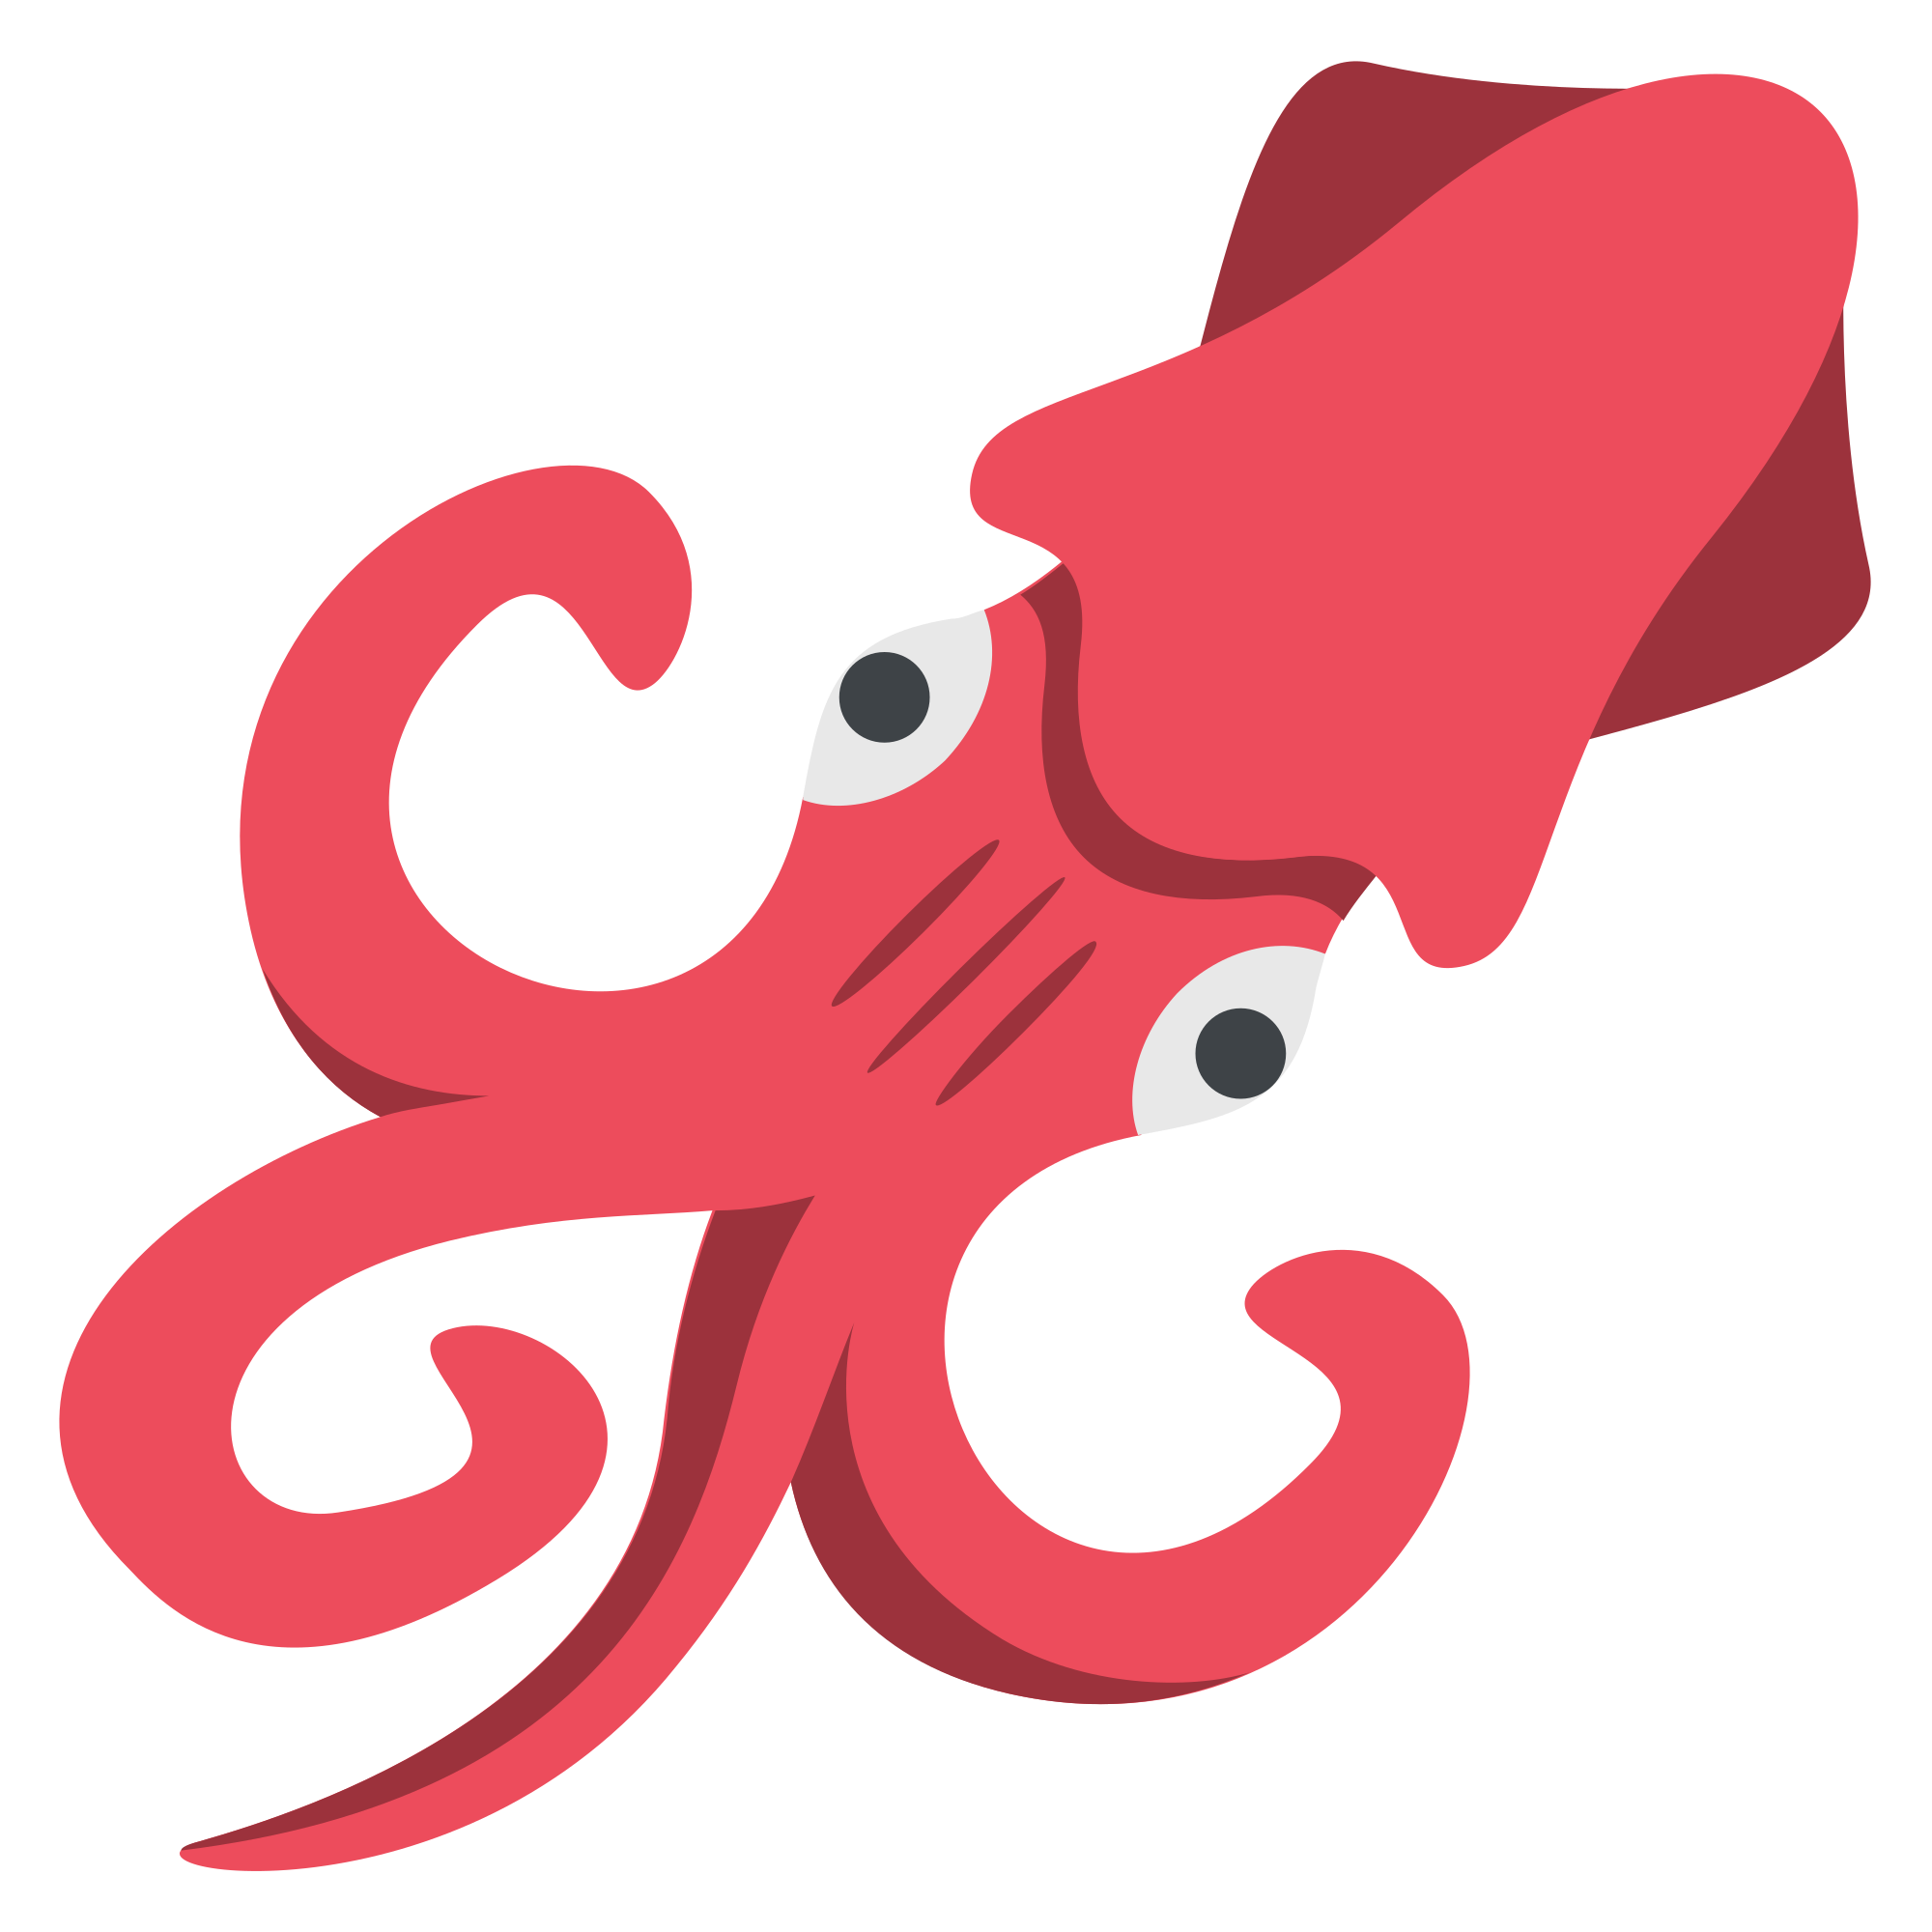 octopus clipart alike